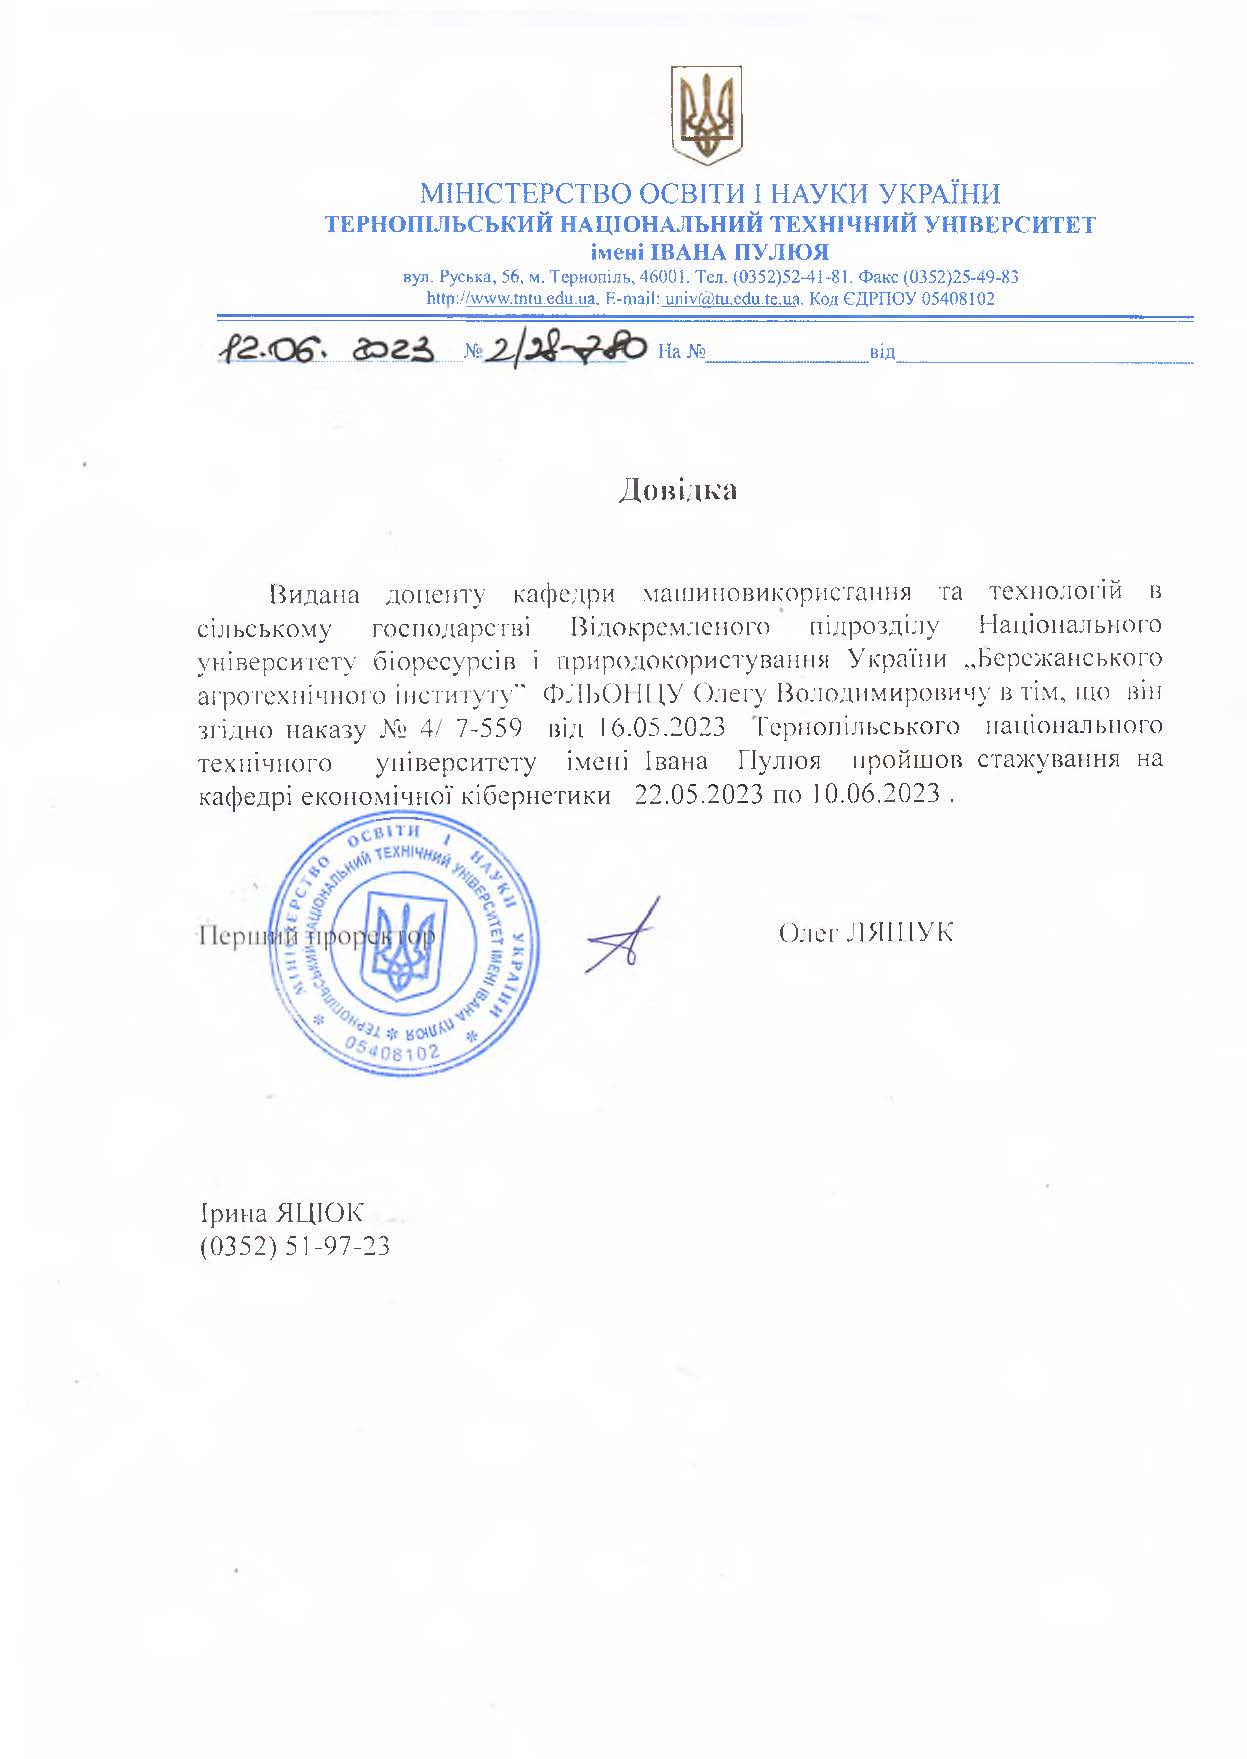 Certificate Potapenko